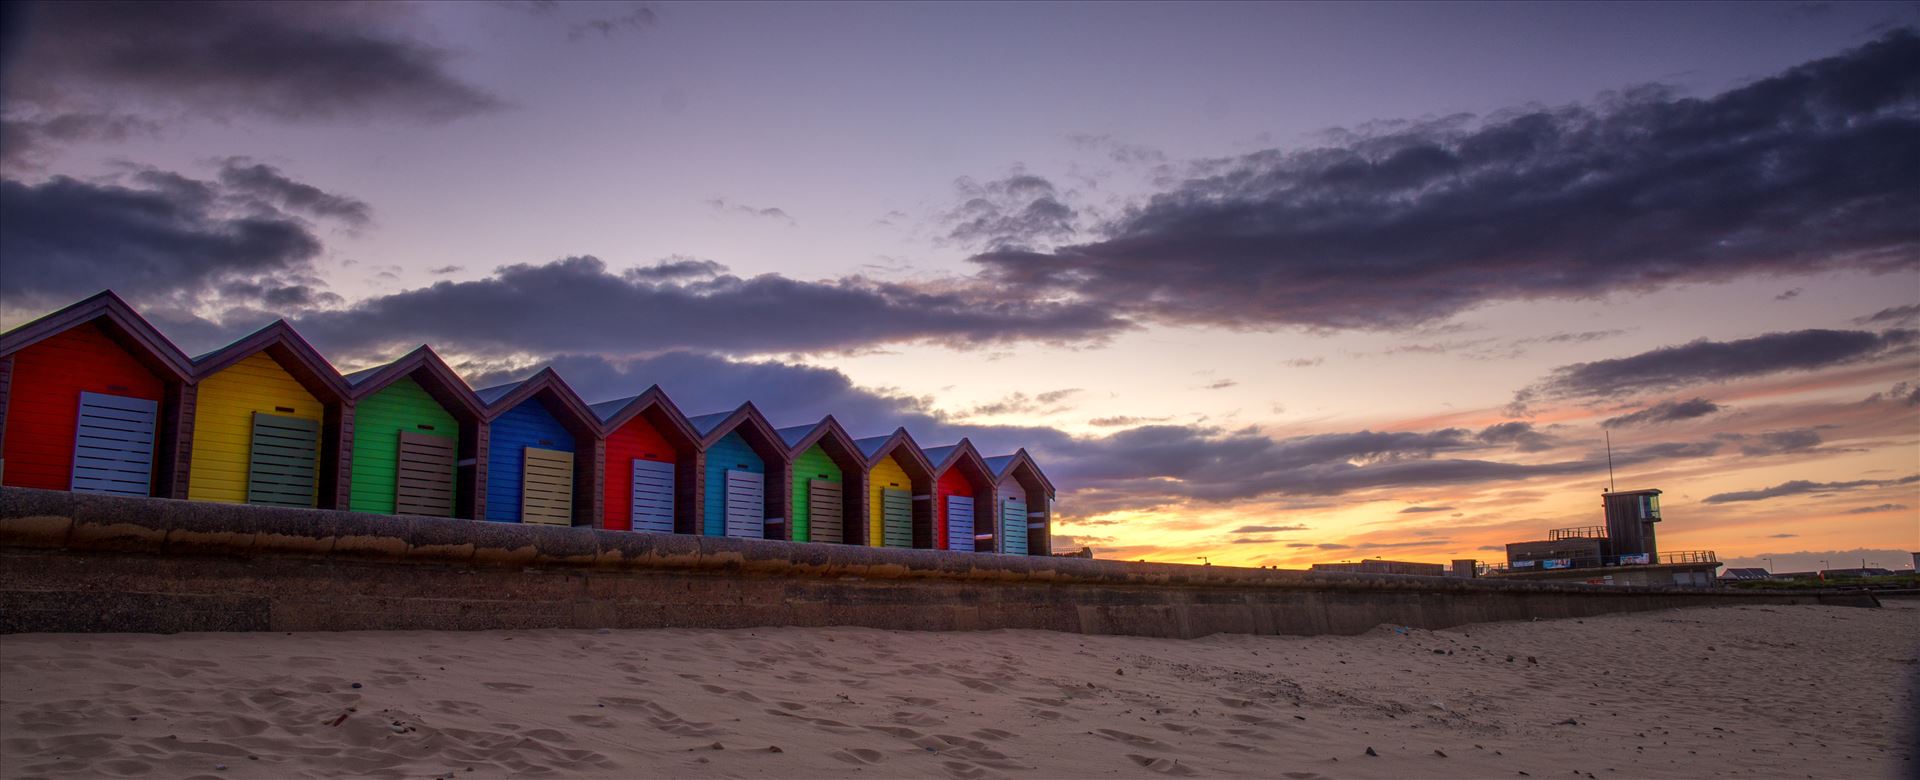 Blyth beach huts - Blyth beach huts at sunset by philreay